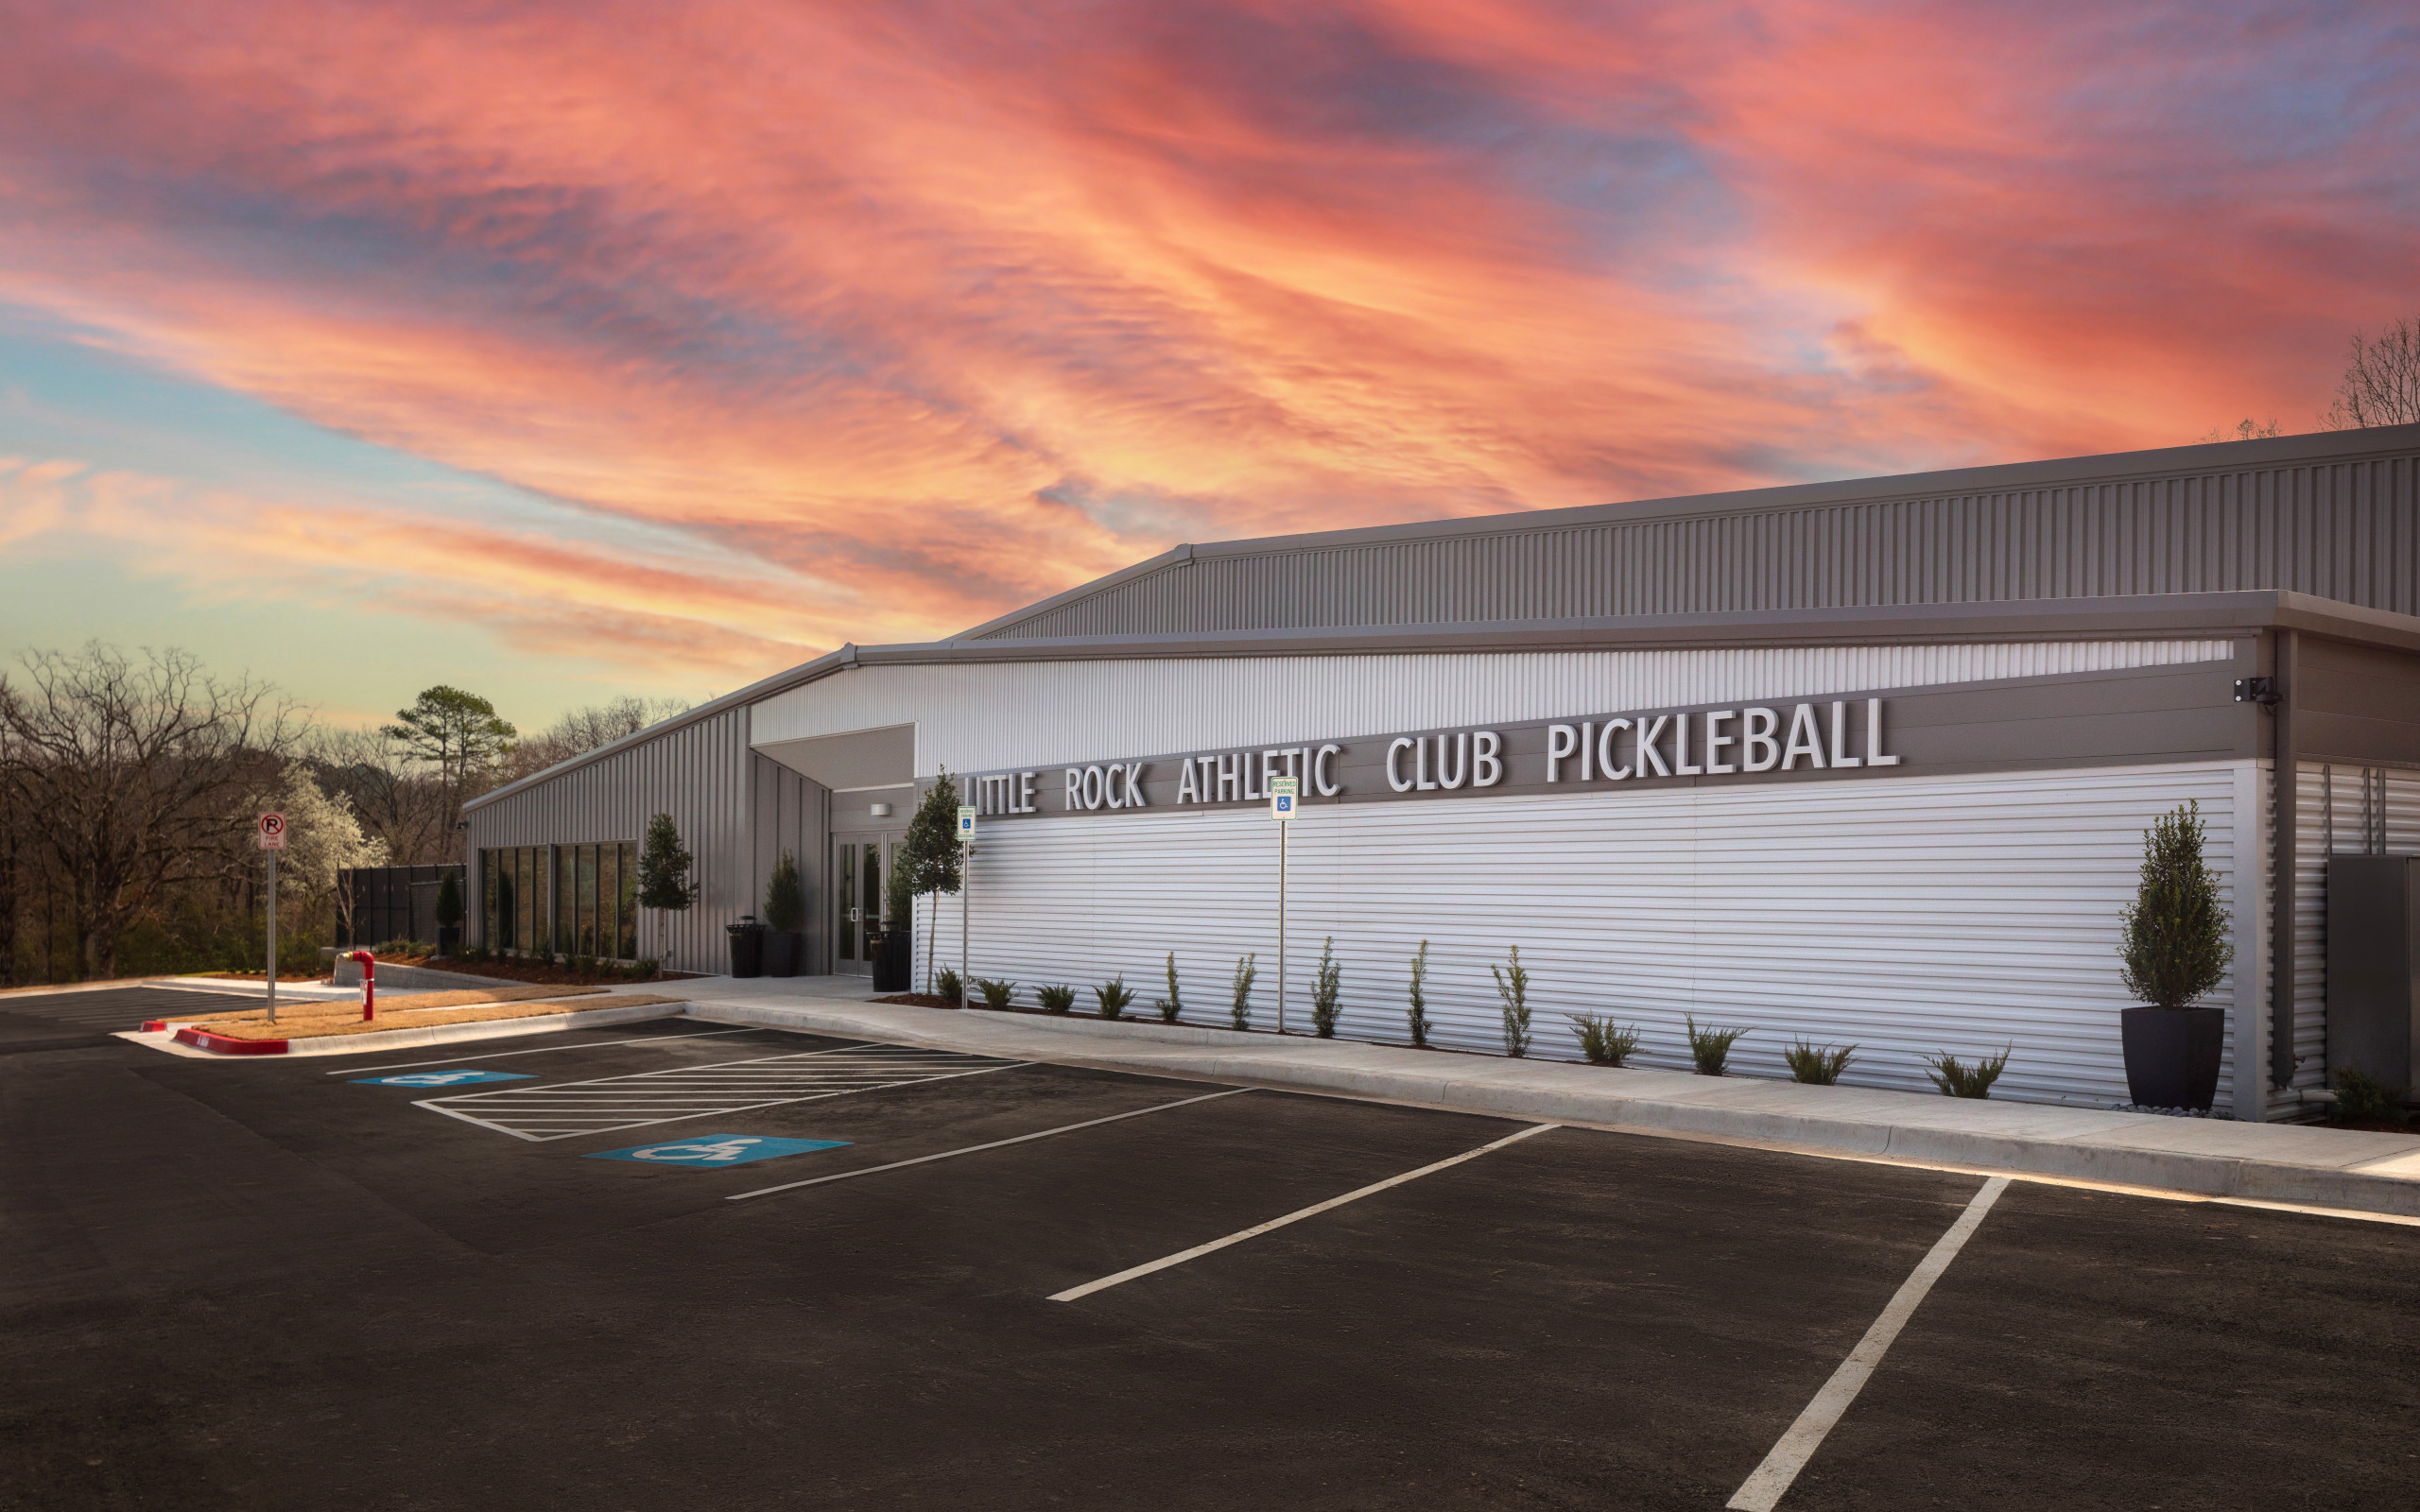 Little Rock Athletic Club Pickleball